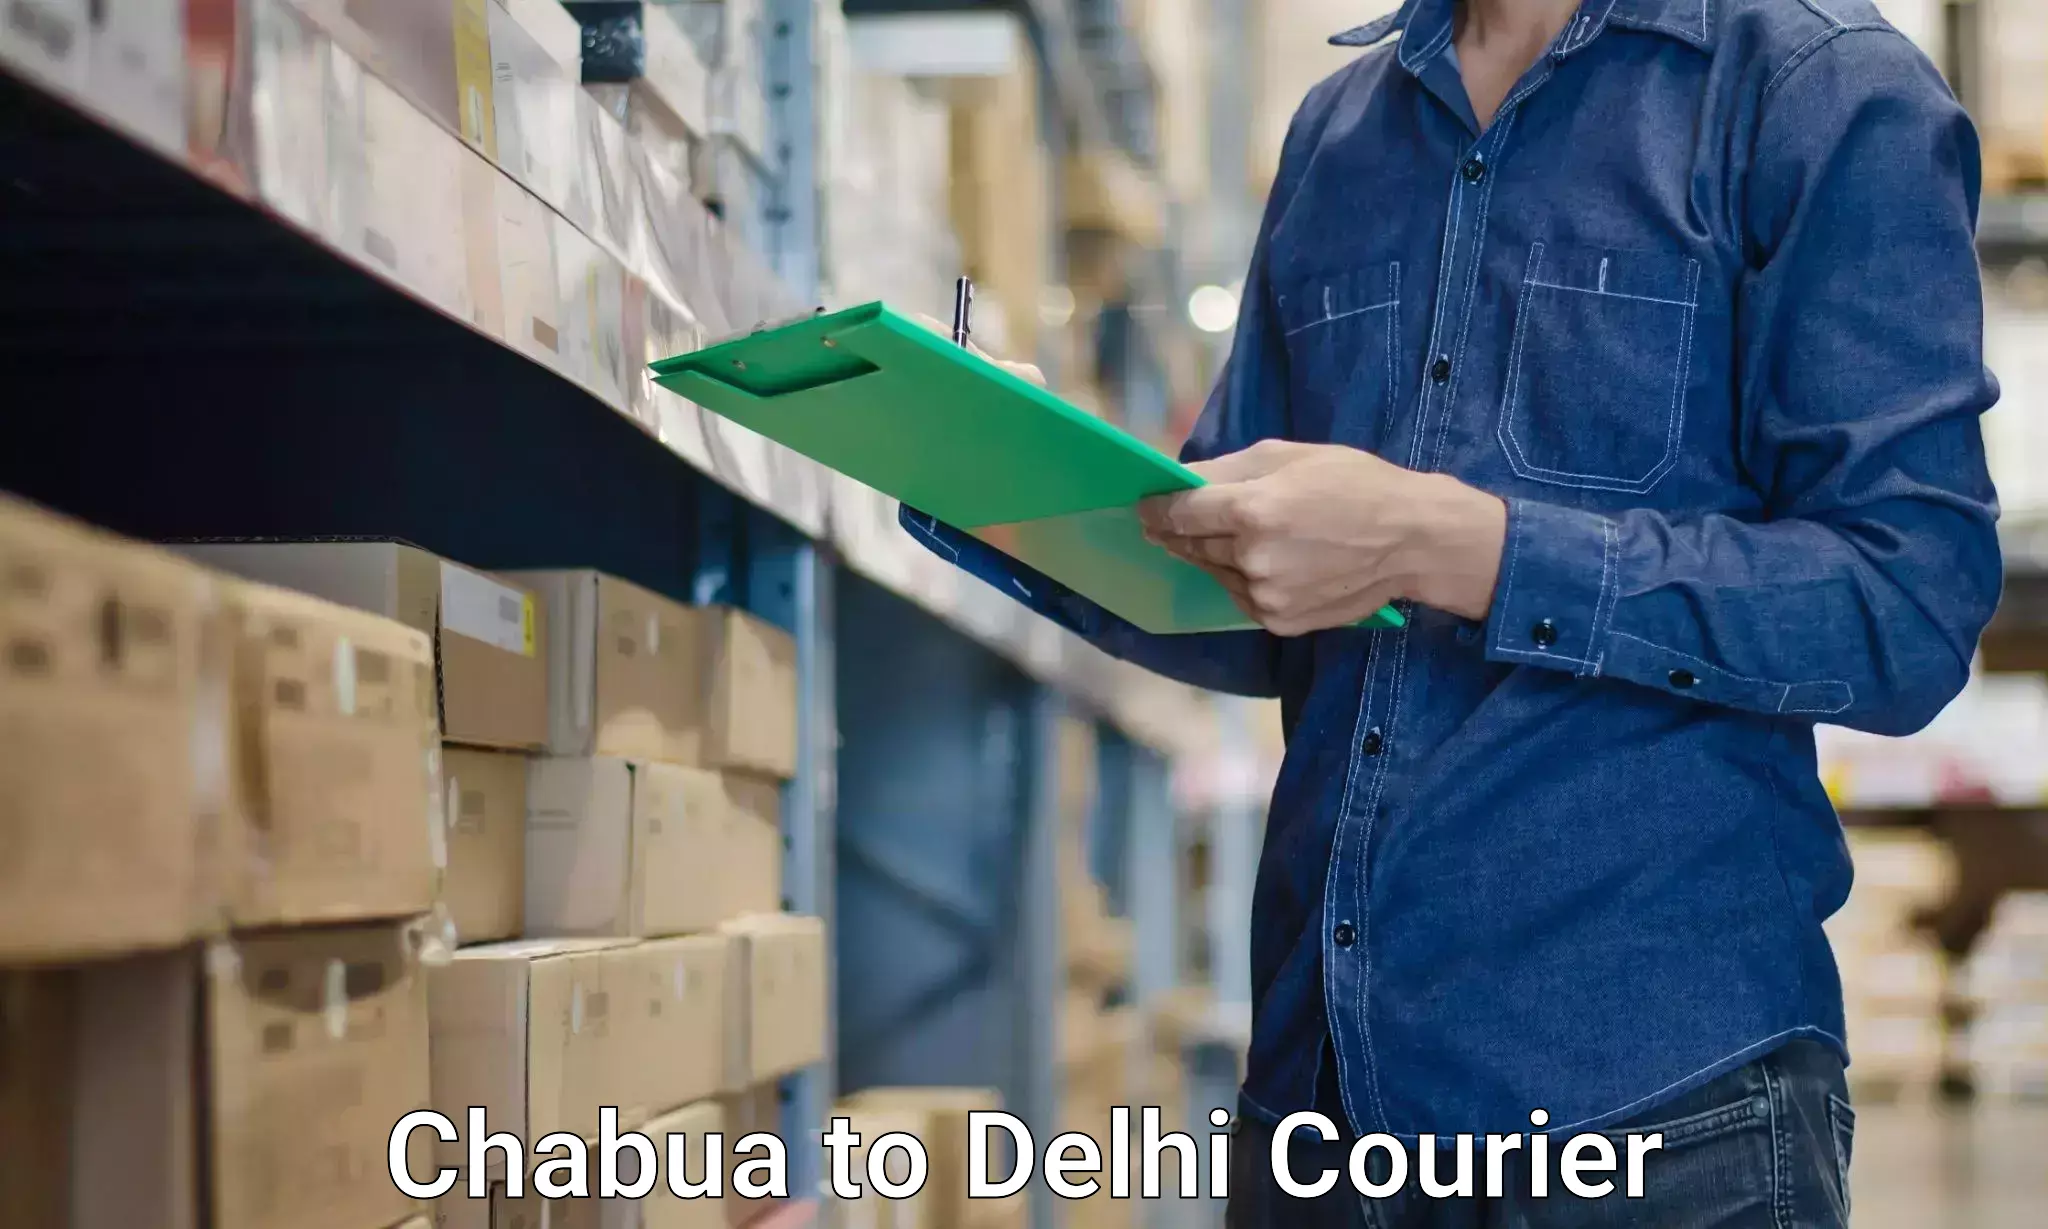 Professional furniture movers in Chabua to University of Delhi